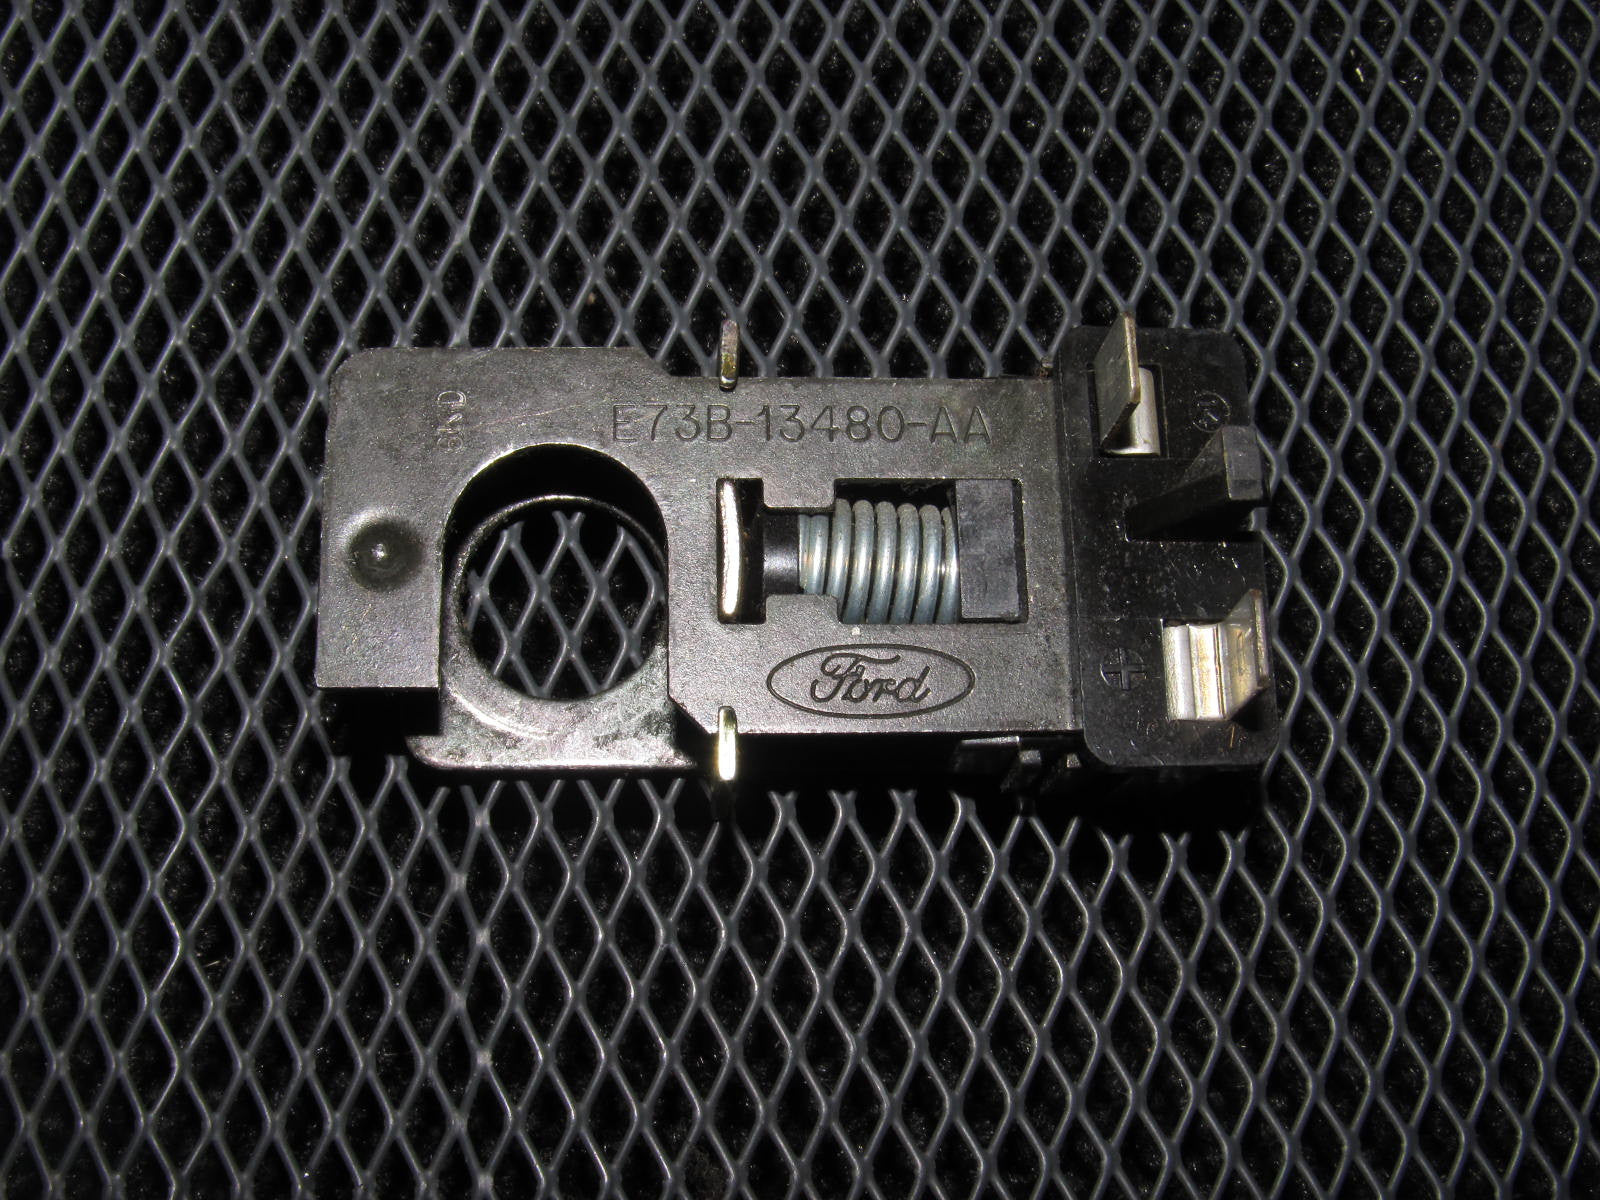 94-97 Ford Mustang OEM Brake Light Switch E73B-13480-AA